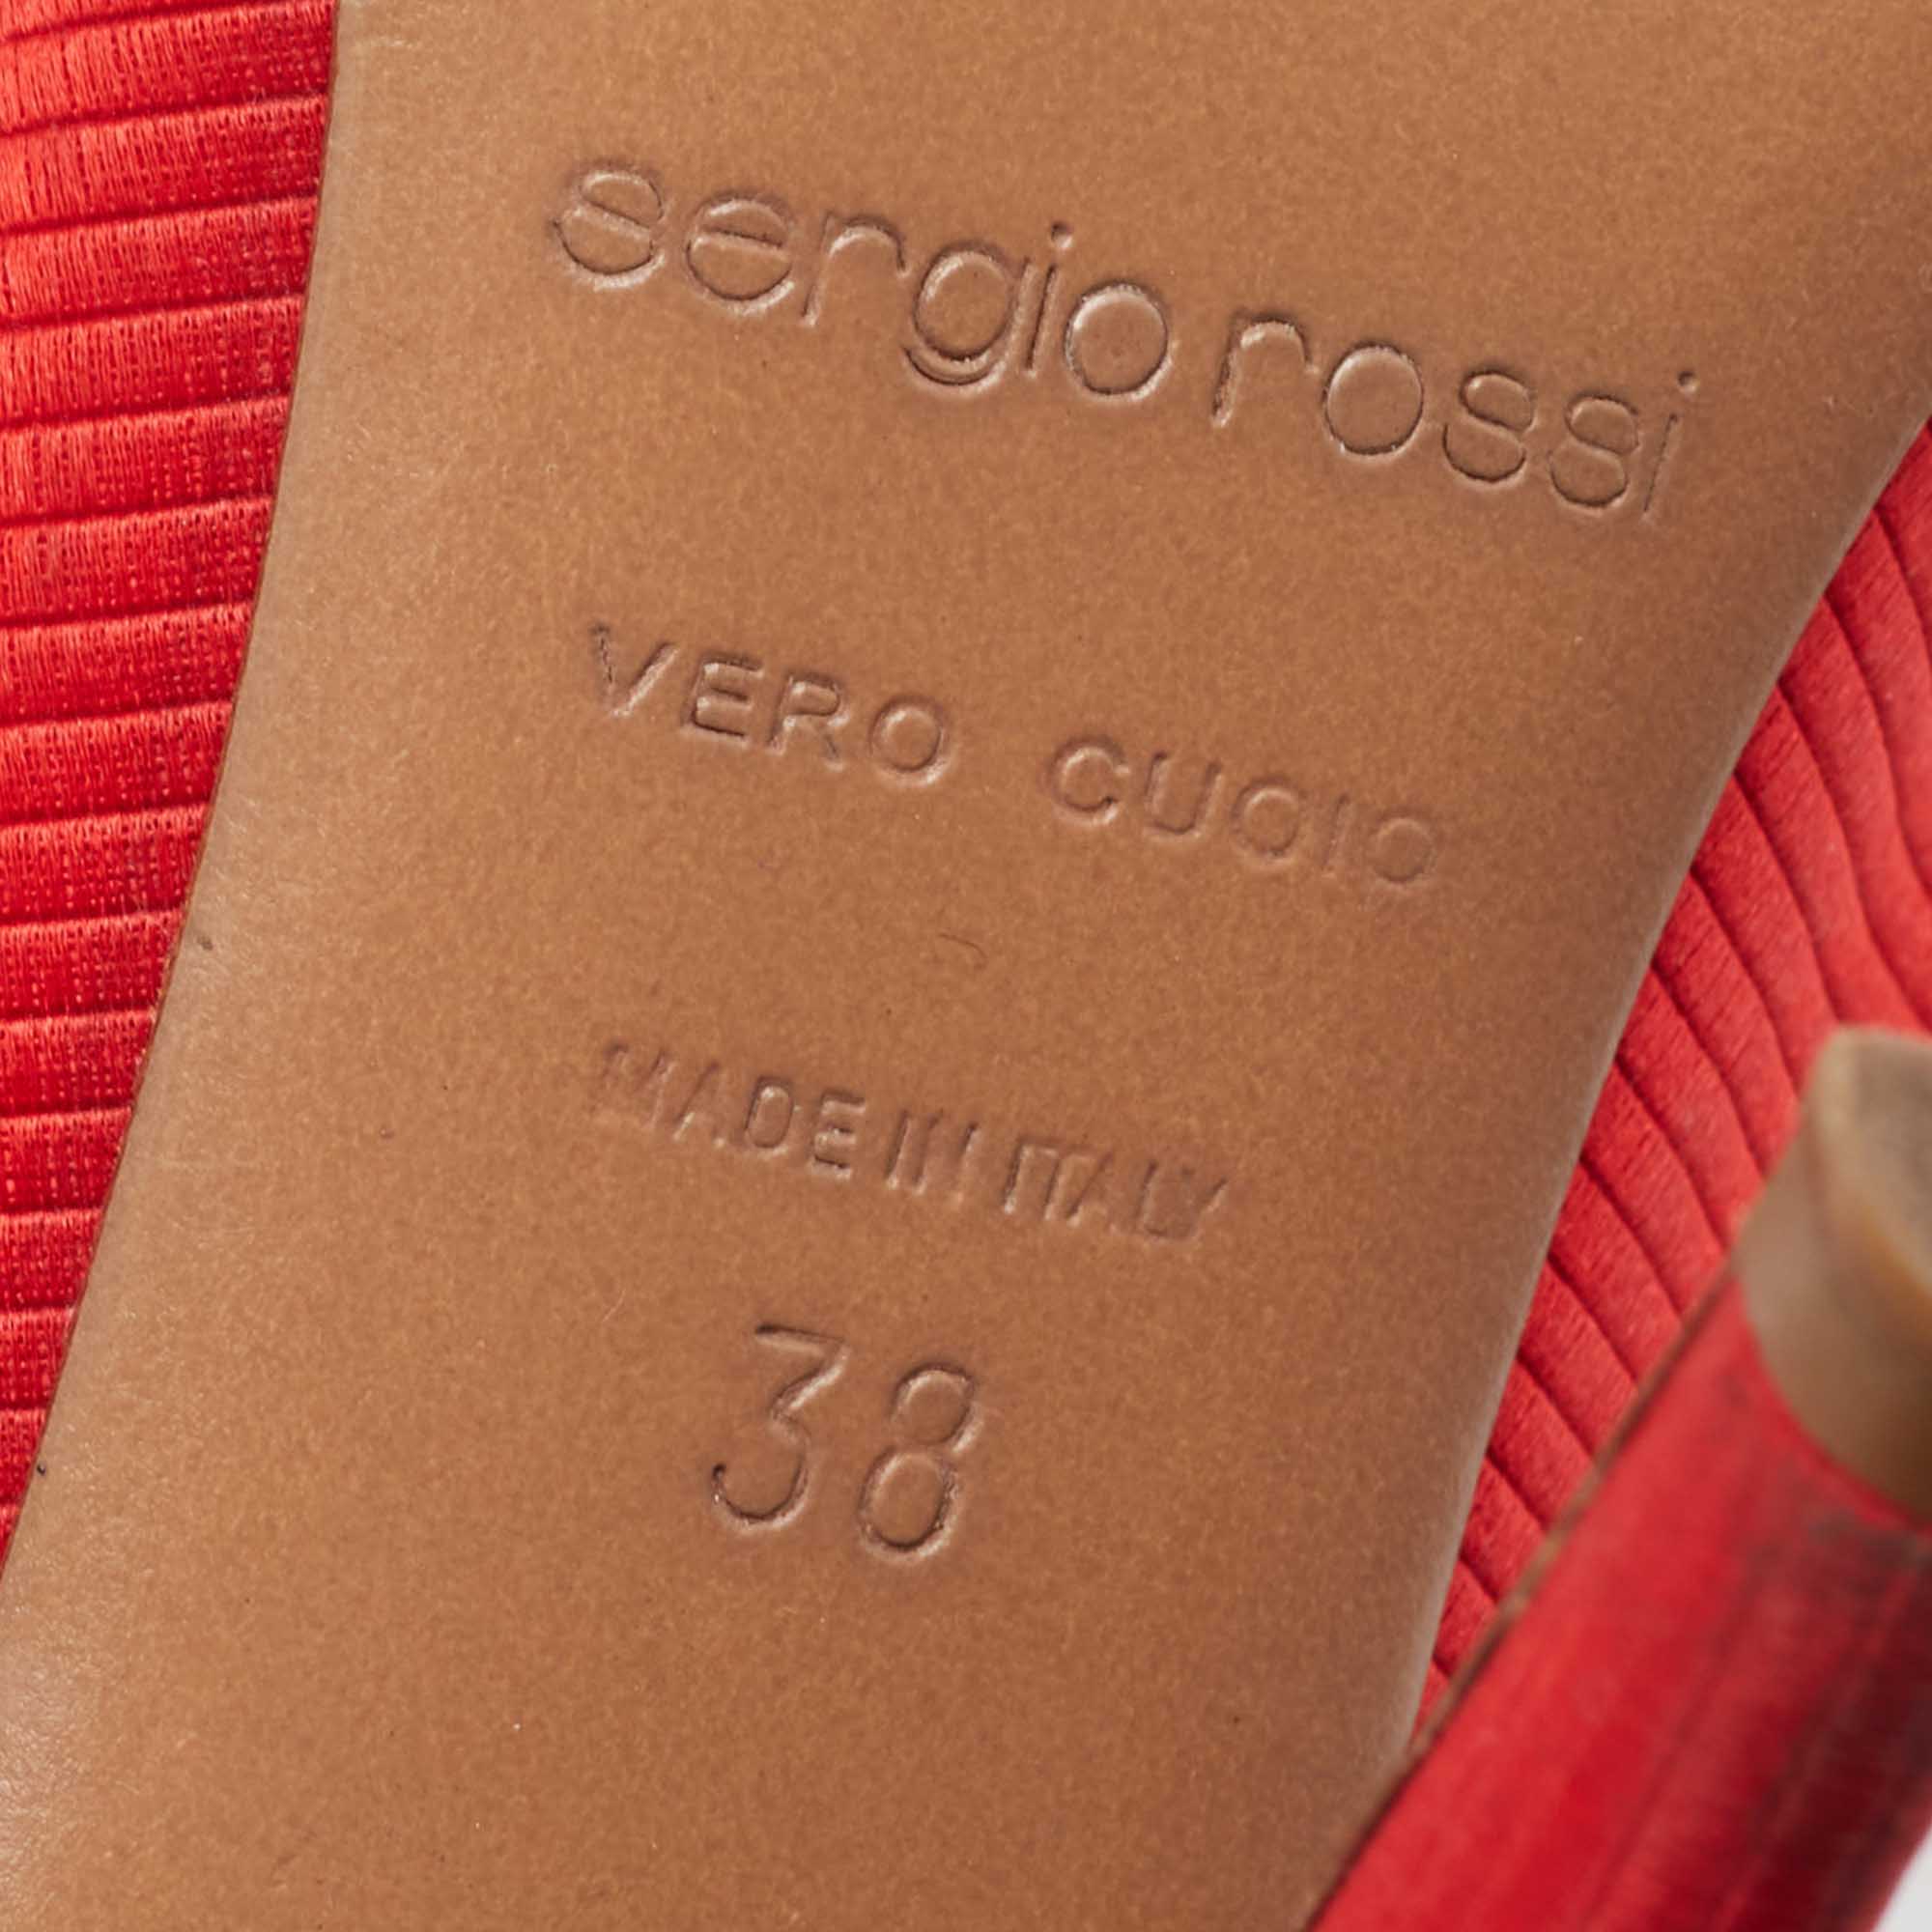 Sergio Rossi Red Fabric Crystal Embellished Slide Sandals Size 38